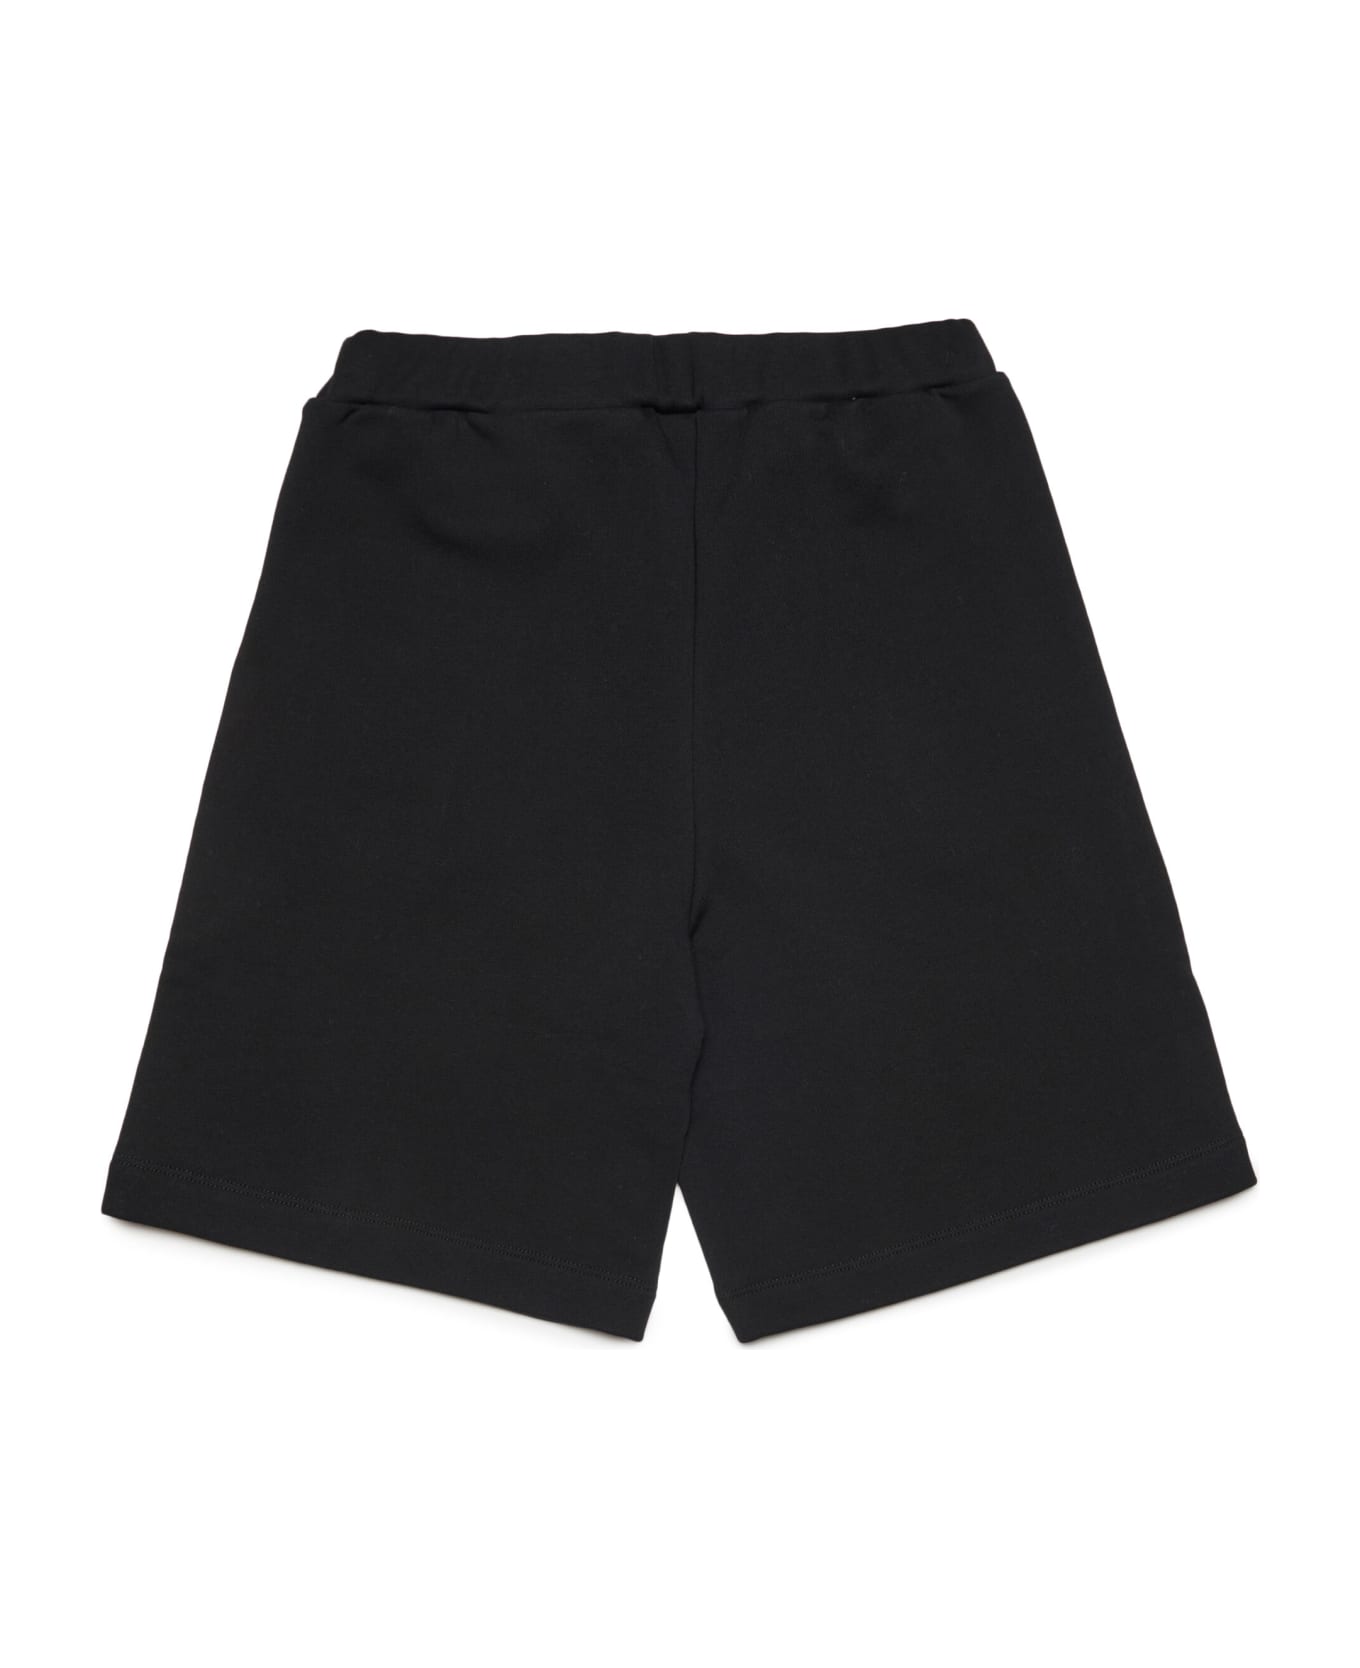 Marni Mp66u Shorts Marni Branded Fleece Shorts - Black